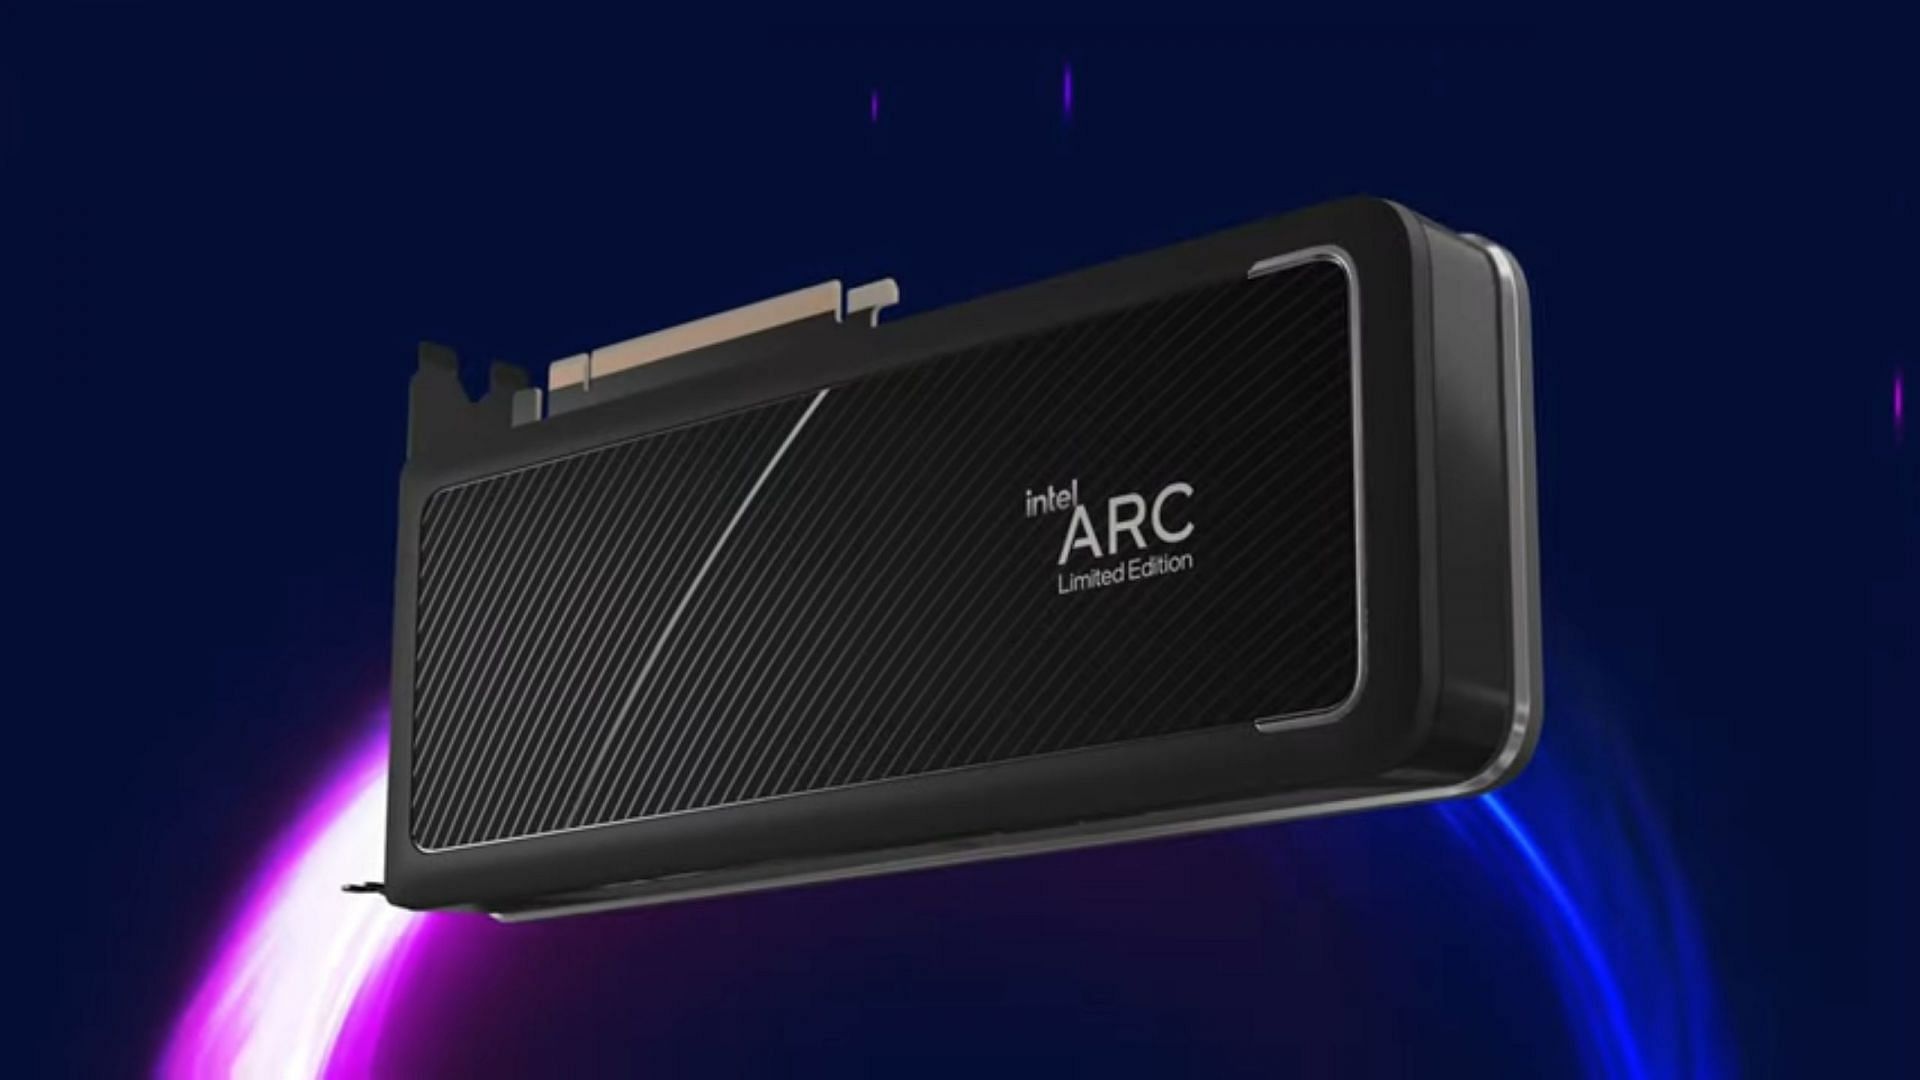 The Intel ARC Limited Edition video card (Image via Intel)